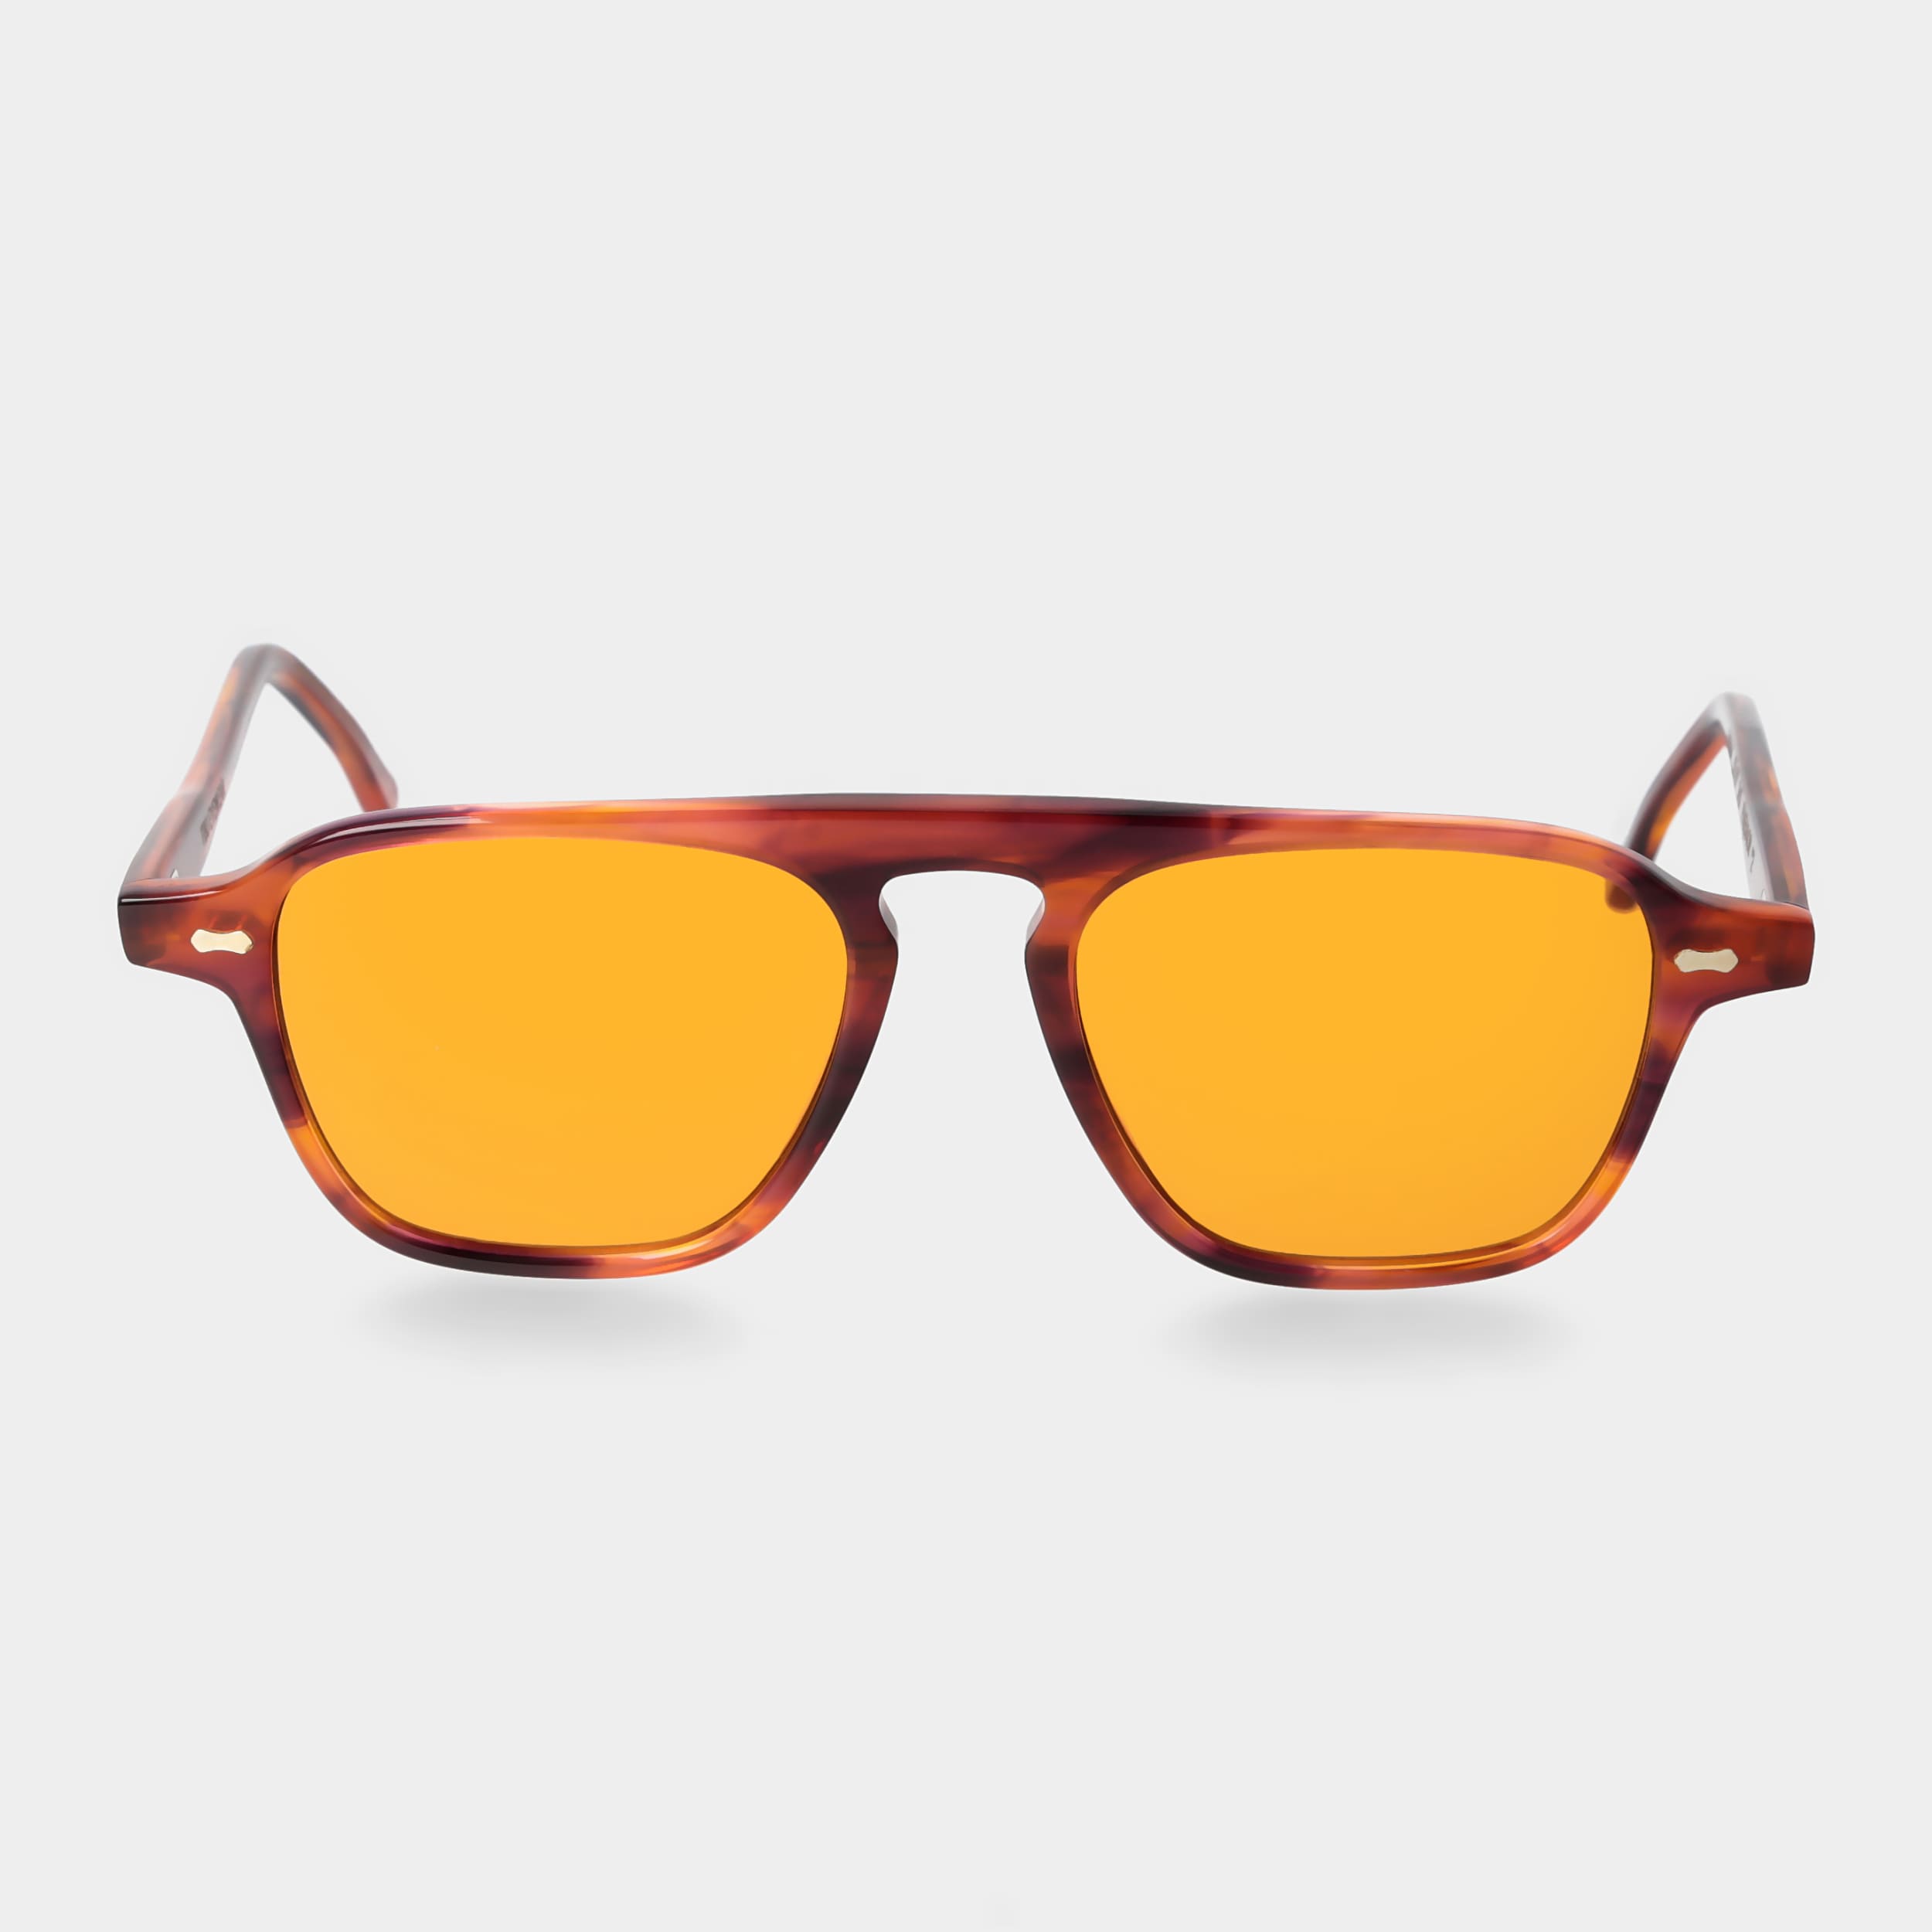 sunglasses-panama-eco-havana-orange-sustainable-tbd-eyewear-front